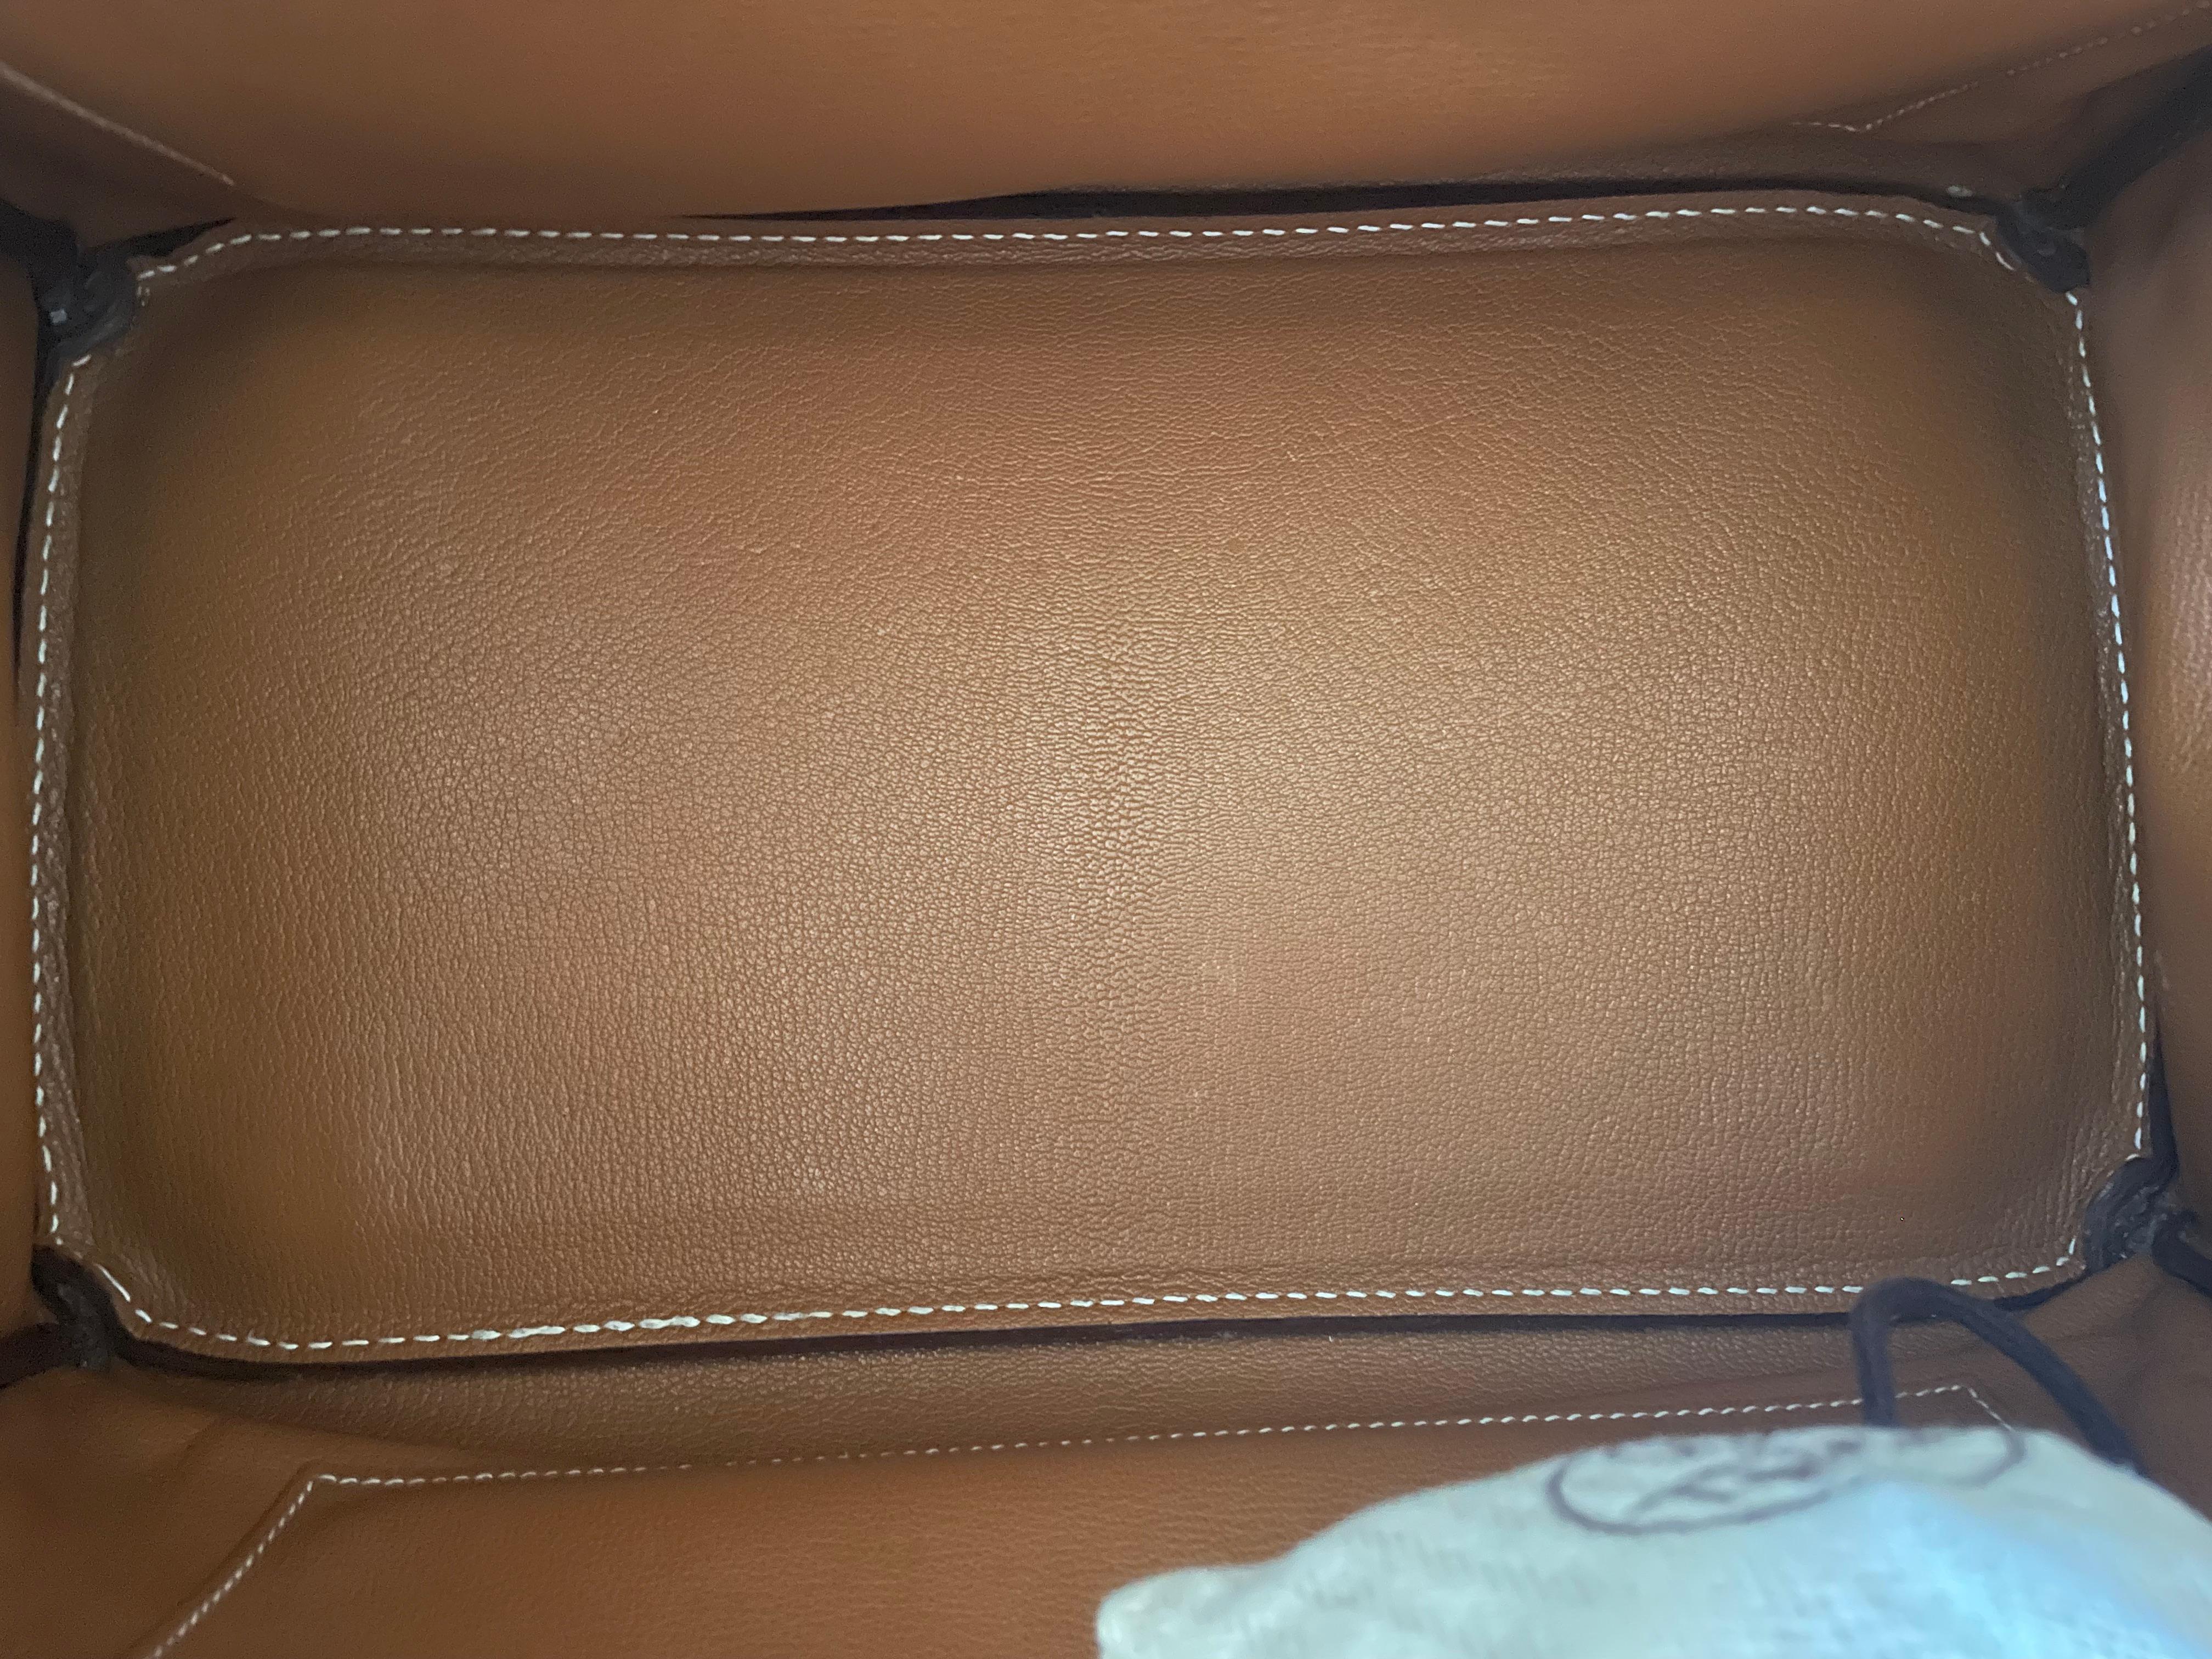 Hermès Birkin 35 Gold handbag in Espom leather and white stitching 10